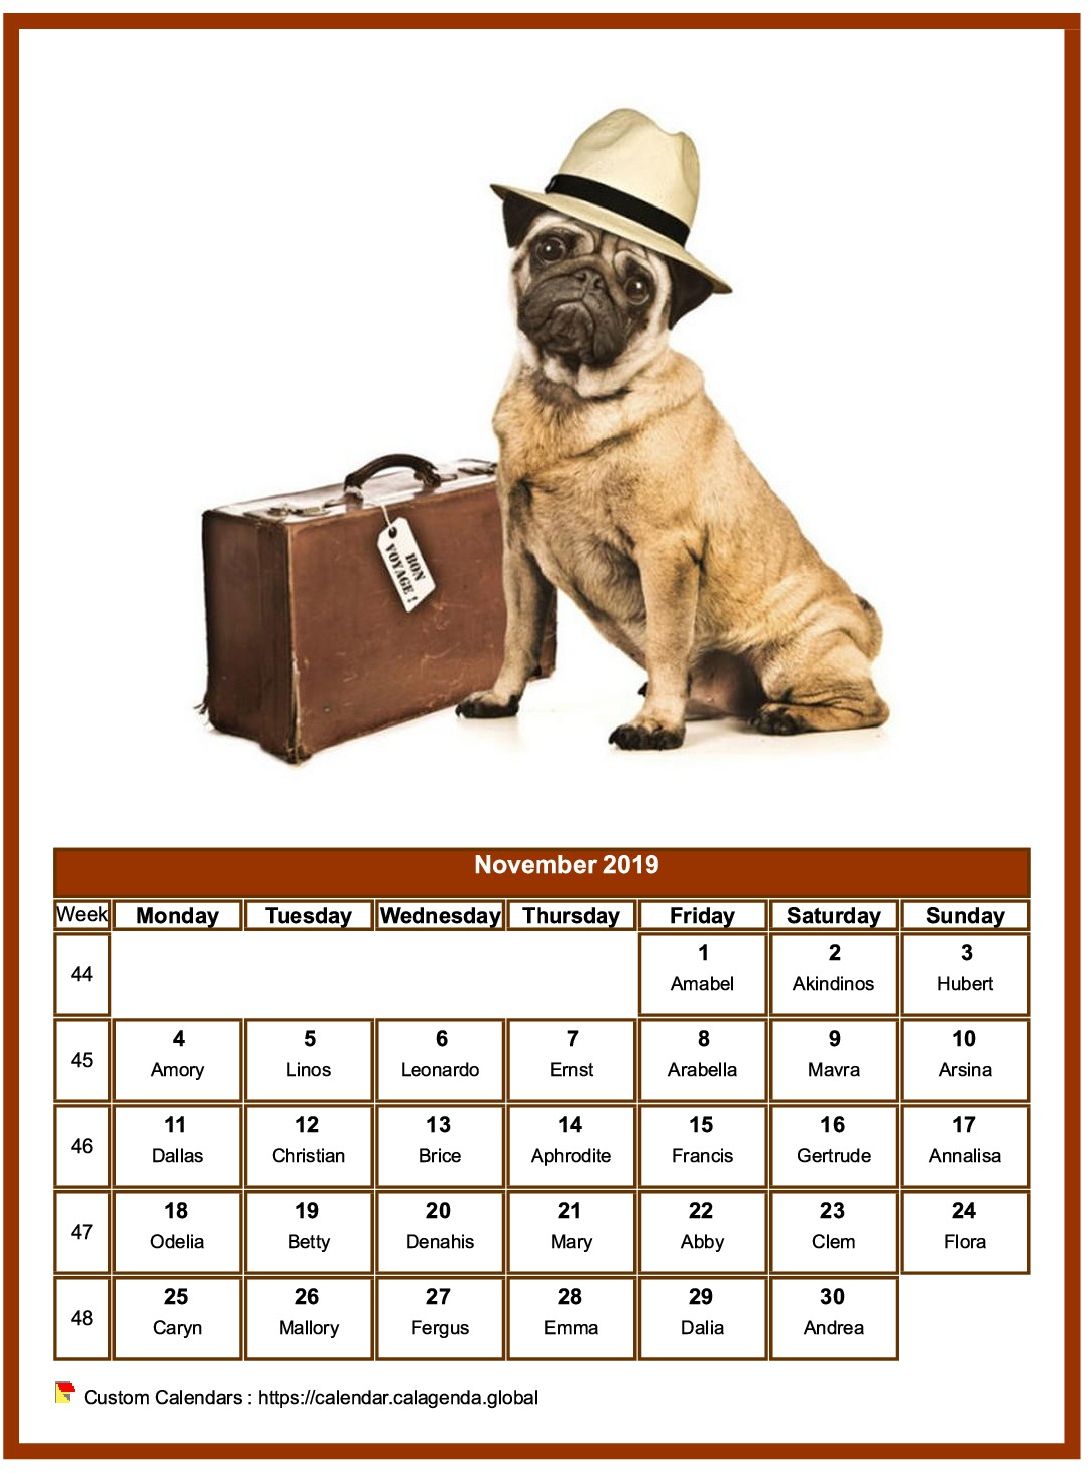 Calendar November 2019 dogs